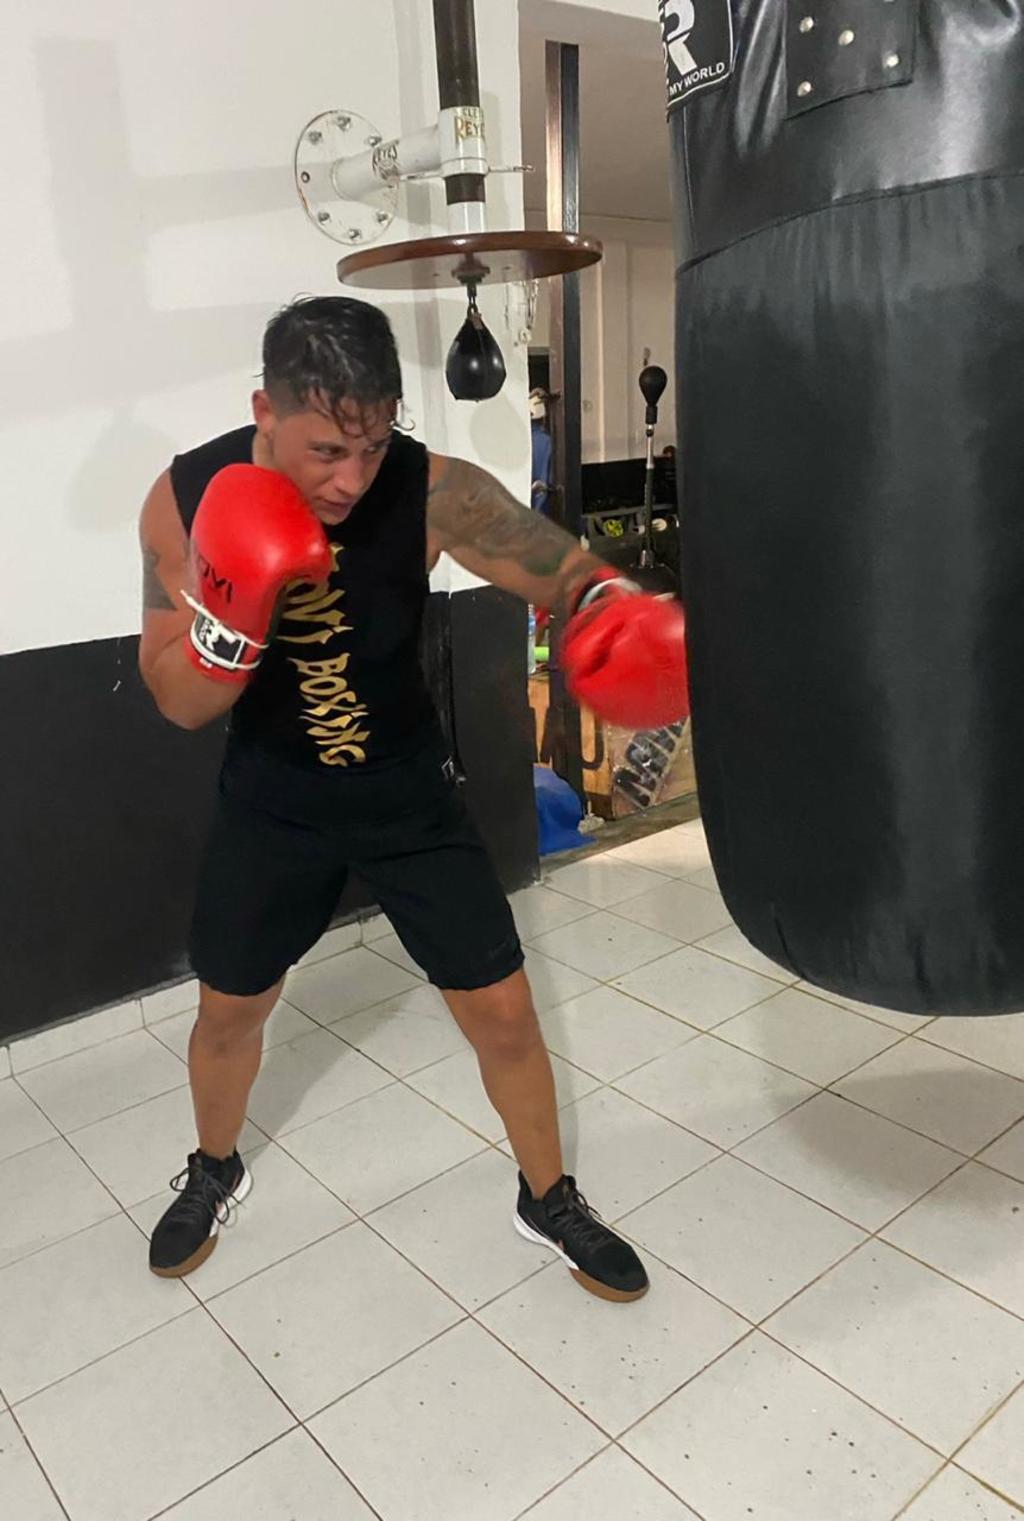 En excelente condición física regresó al gimnasio la boxeadora capitalina, que ahora reside en Quintana Roo. (ESPECIAL)